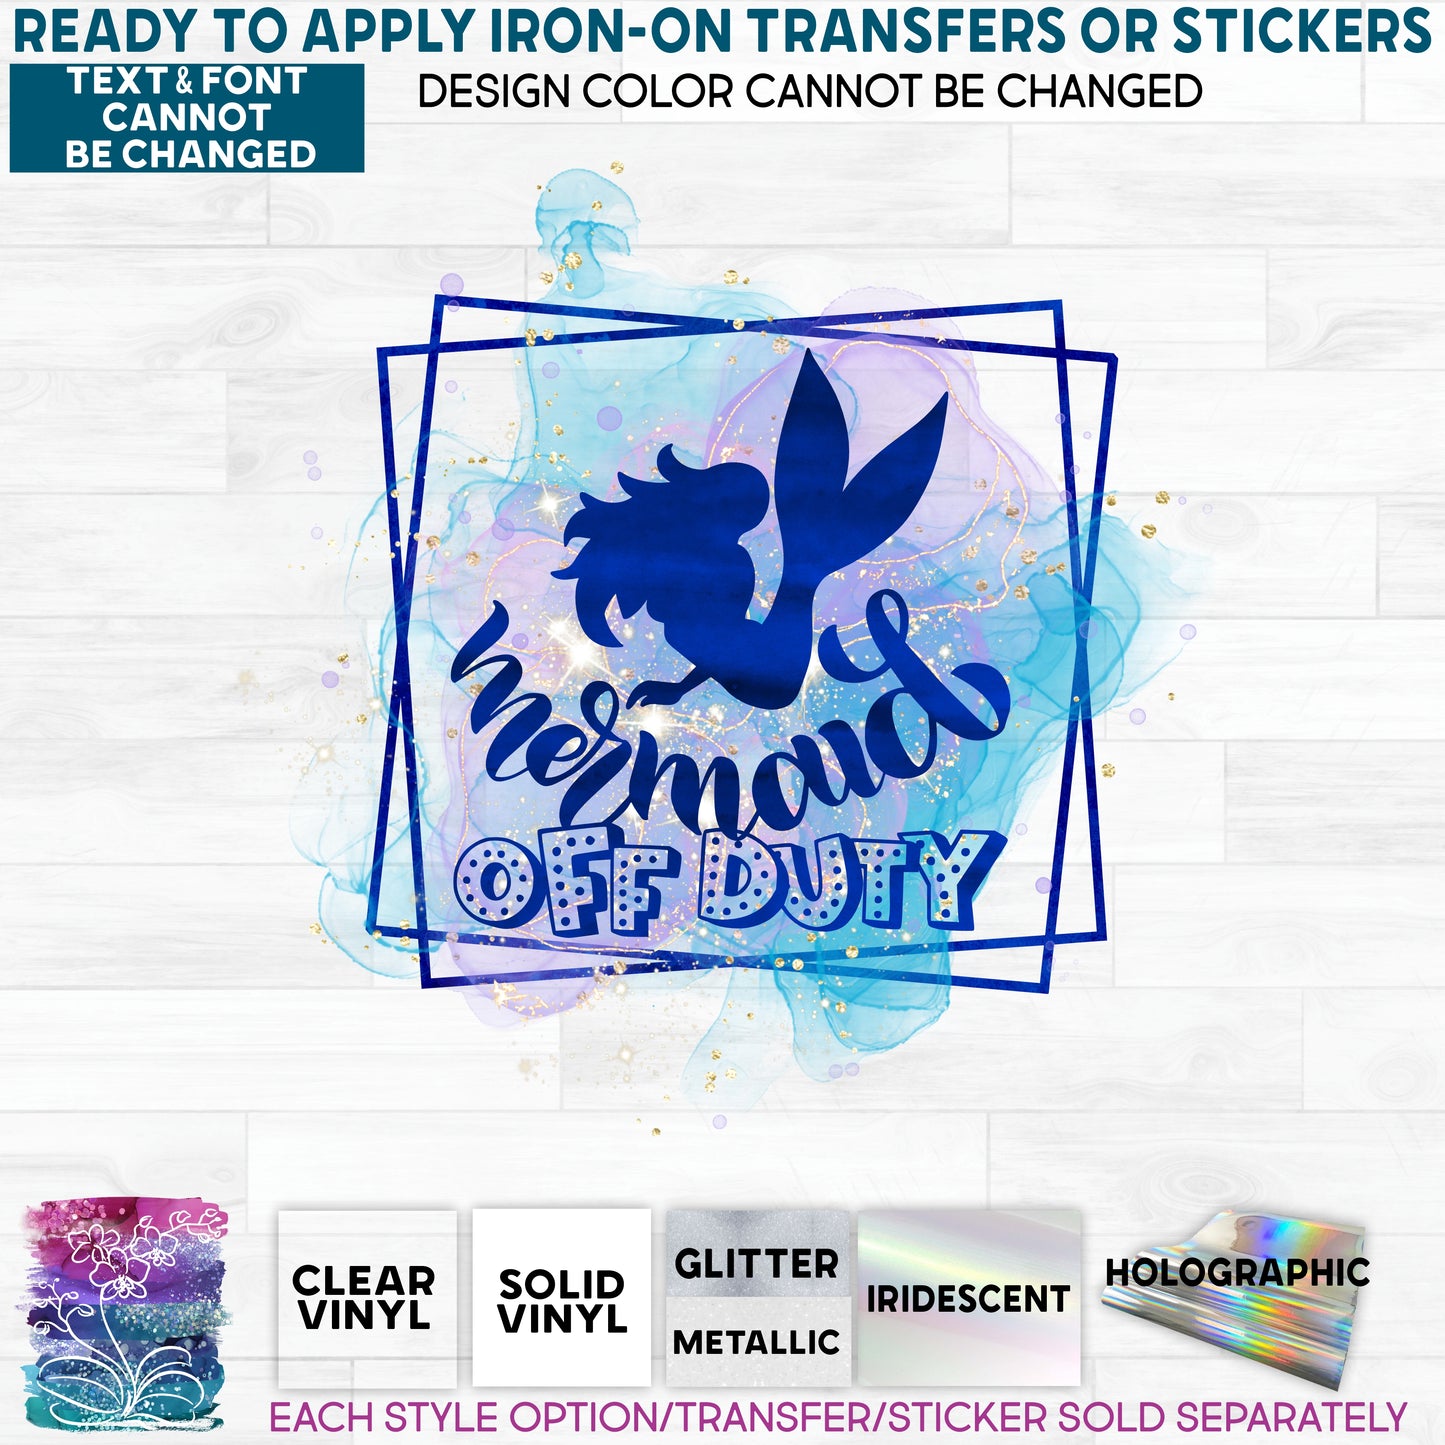 (s198-5H) Mermaid Off Duty Purple Blue Watercolor Glitter or Vinyl Iron-On Transfer or Sticker